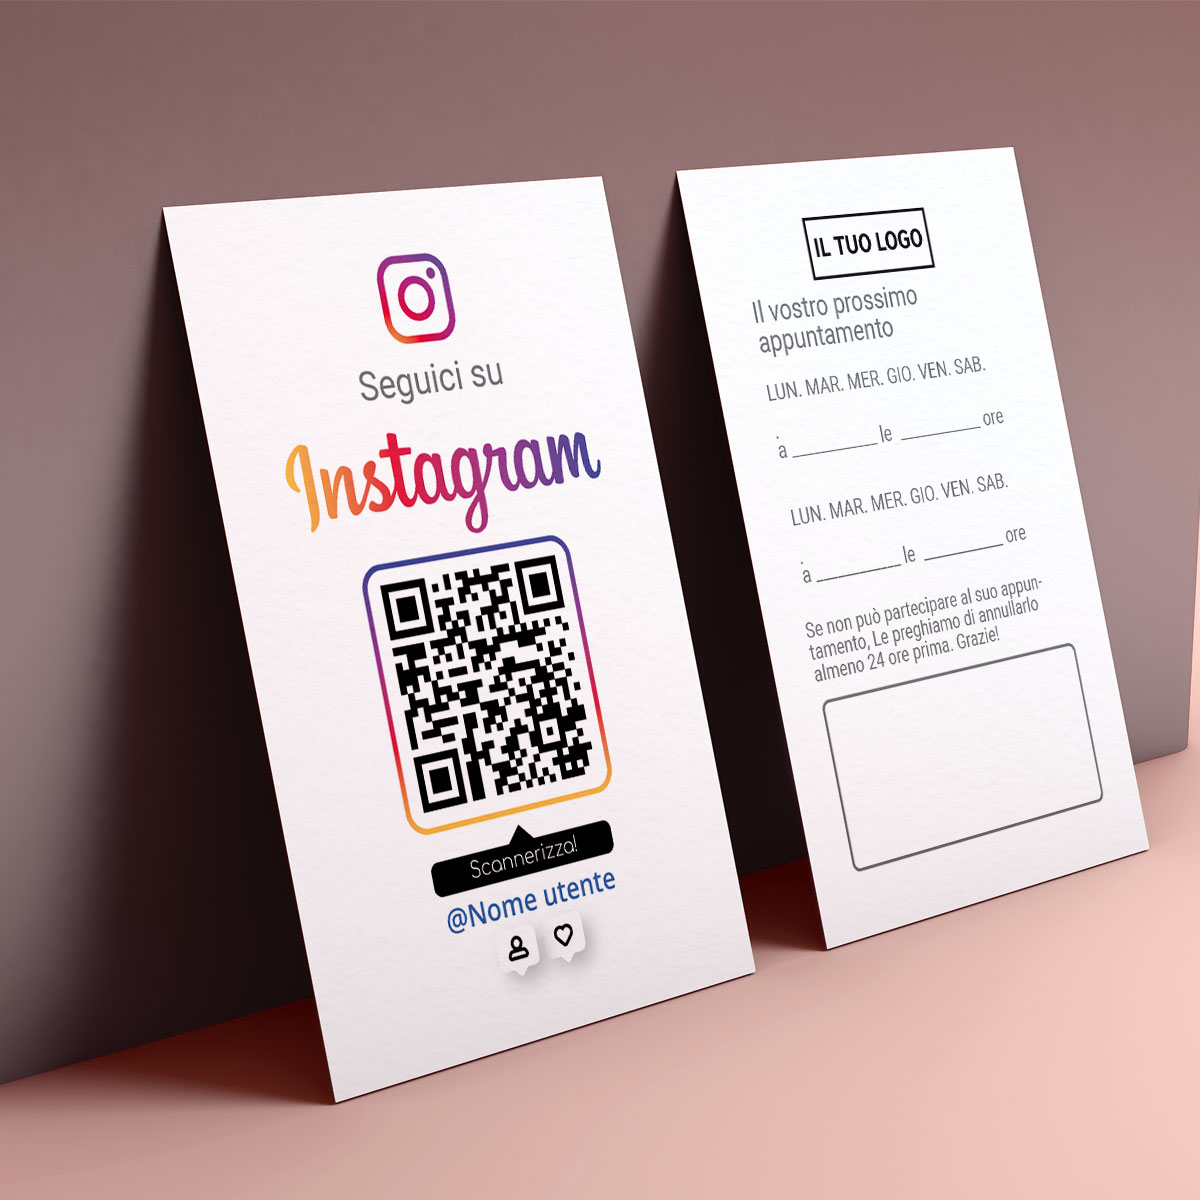 Seguici su Instagram Biglietto d'appuntamento con link al QR Code